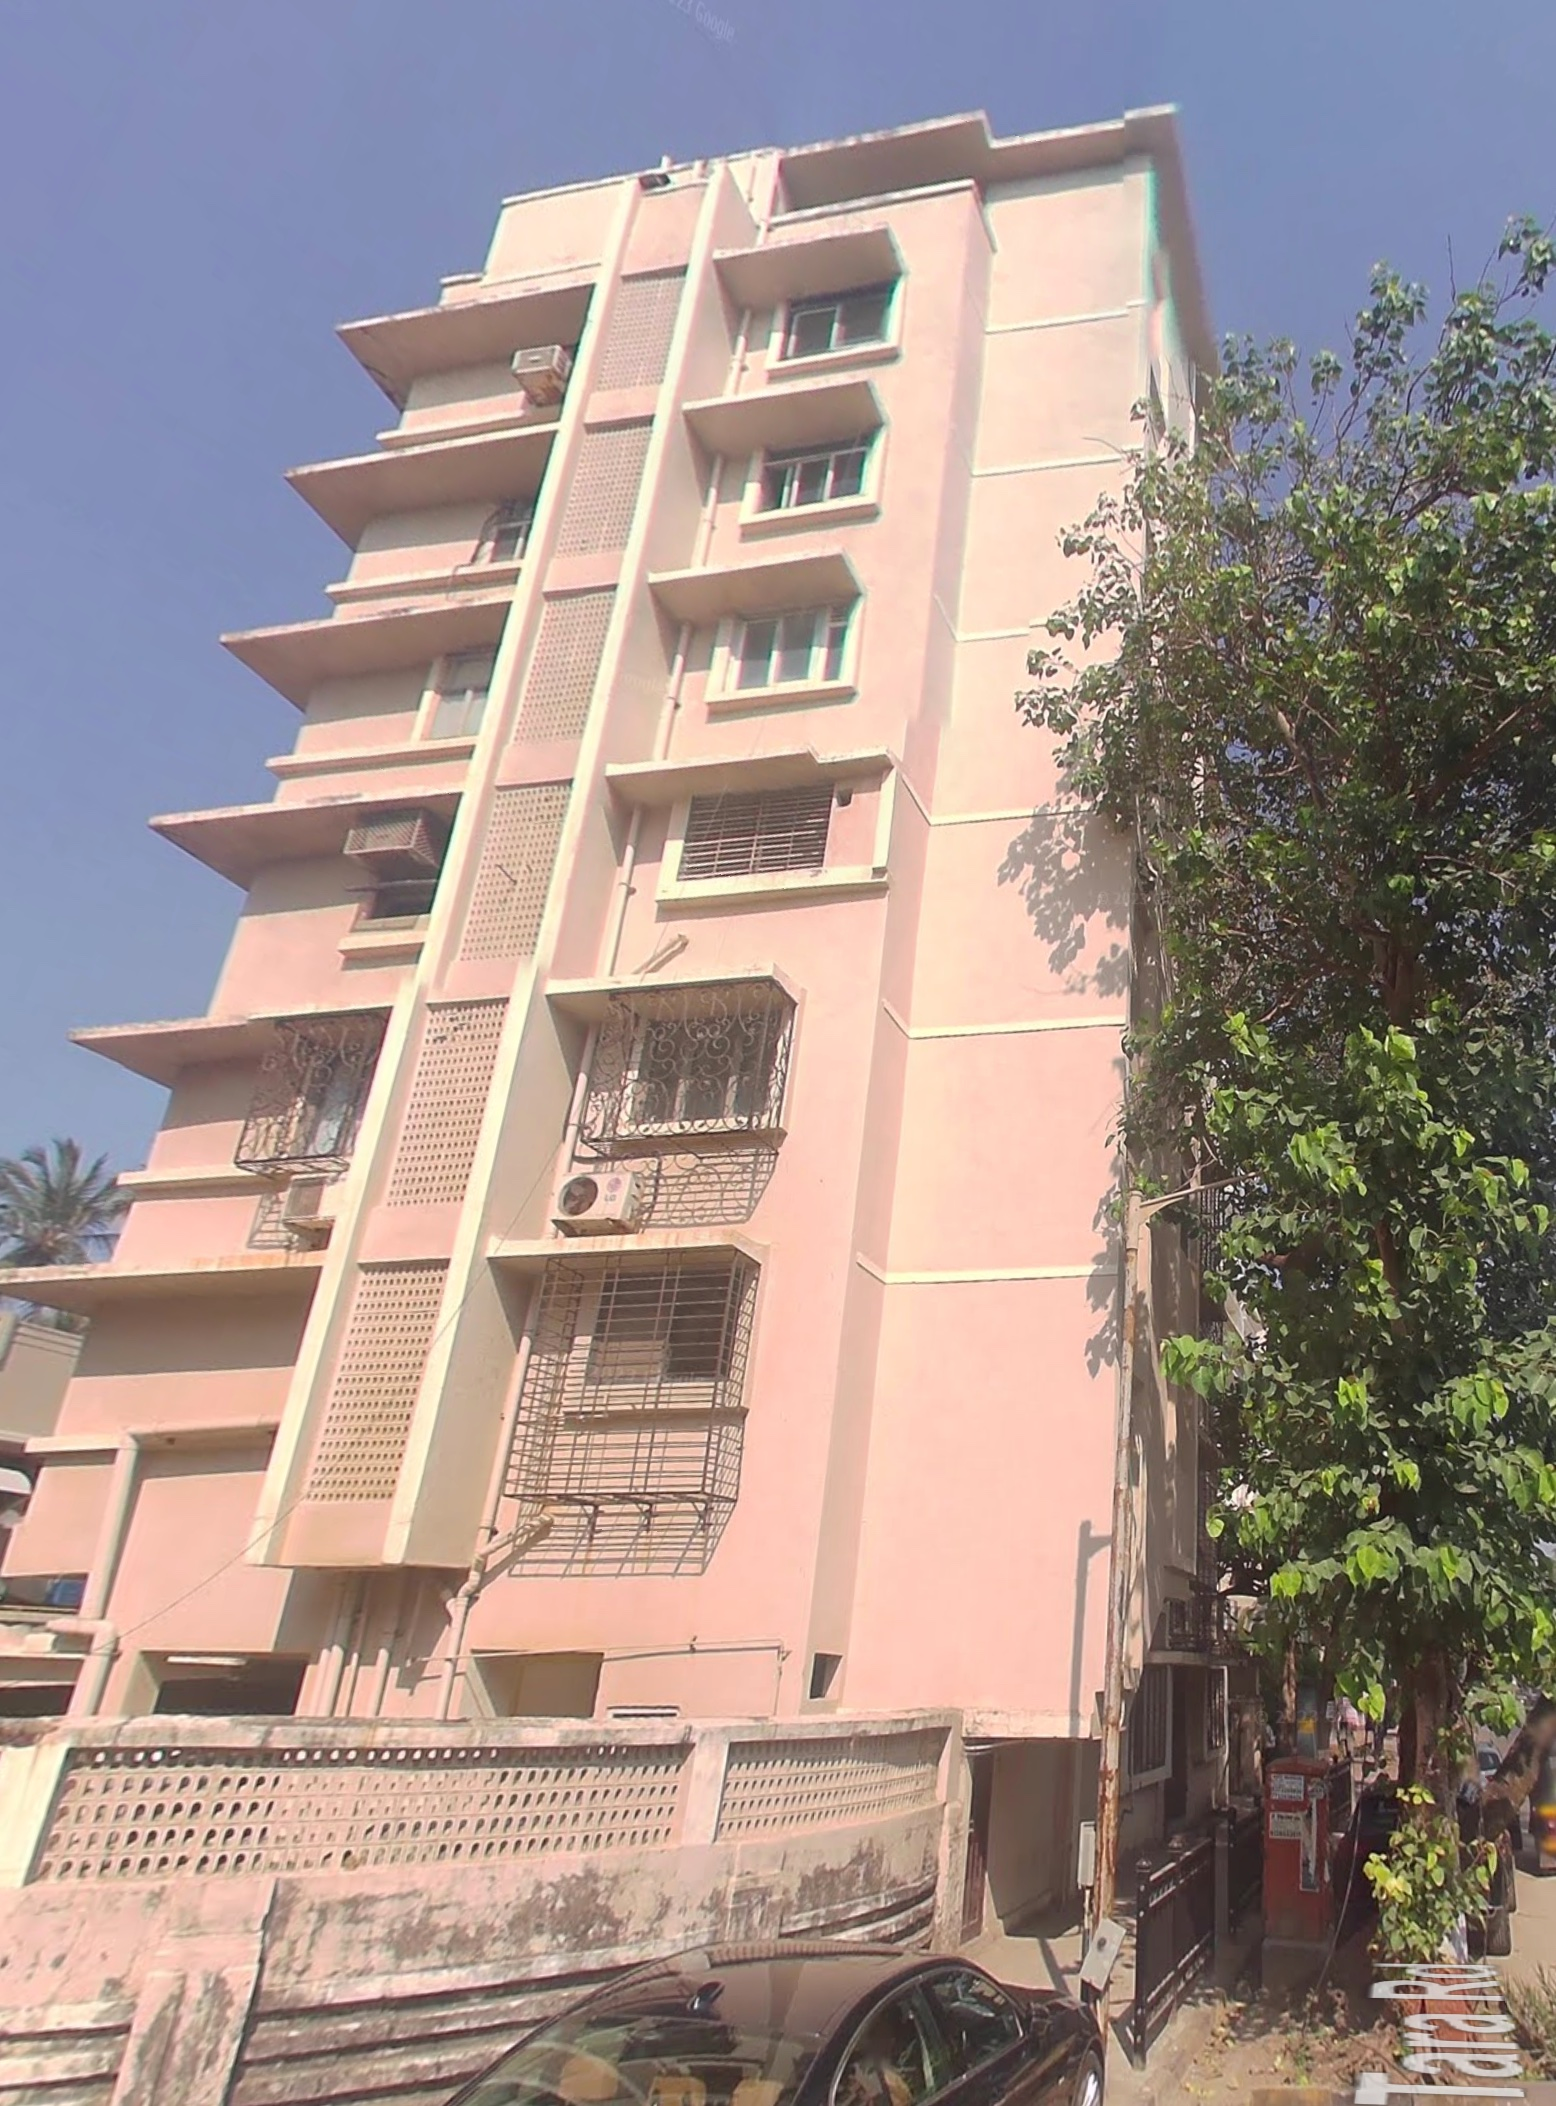 3 BHK Flat on Rent in Juhu - Beachcroft Apartments